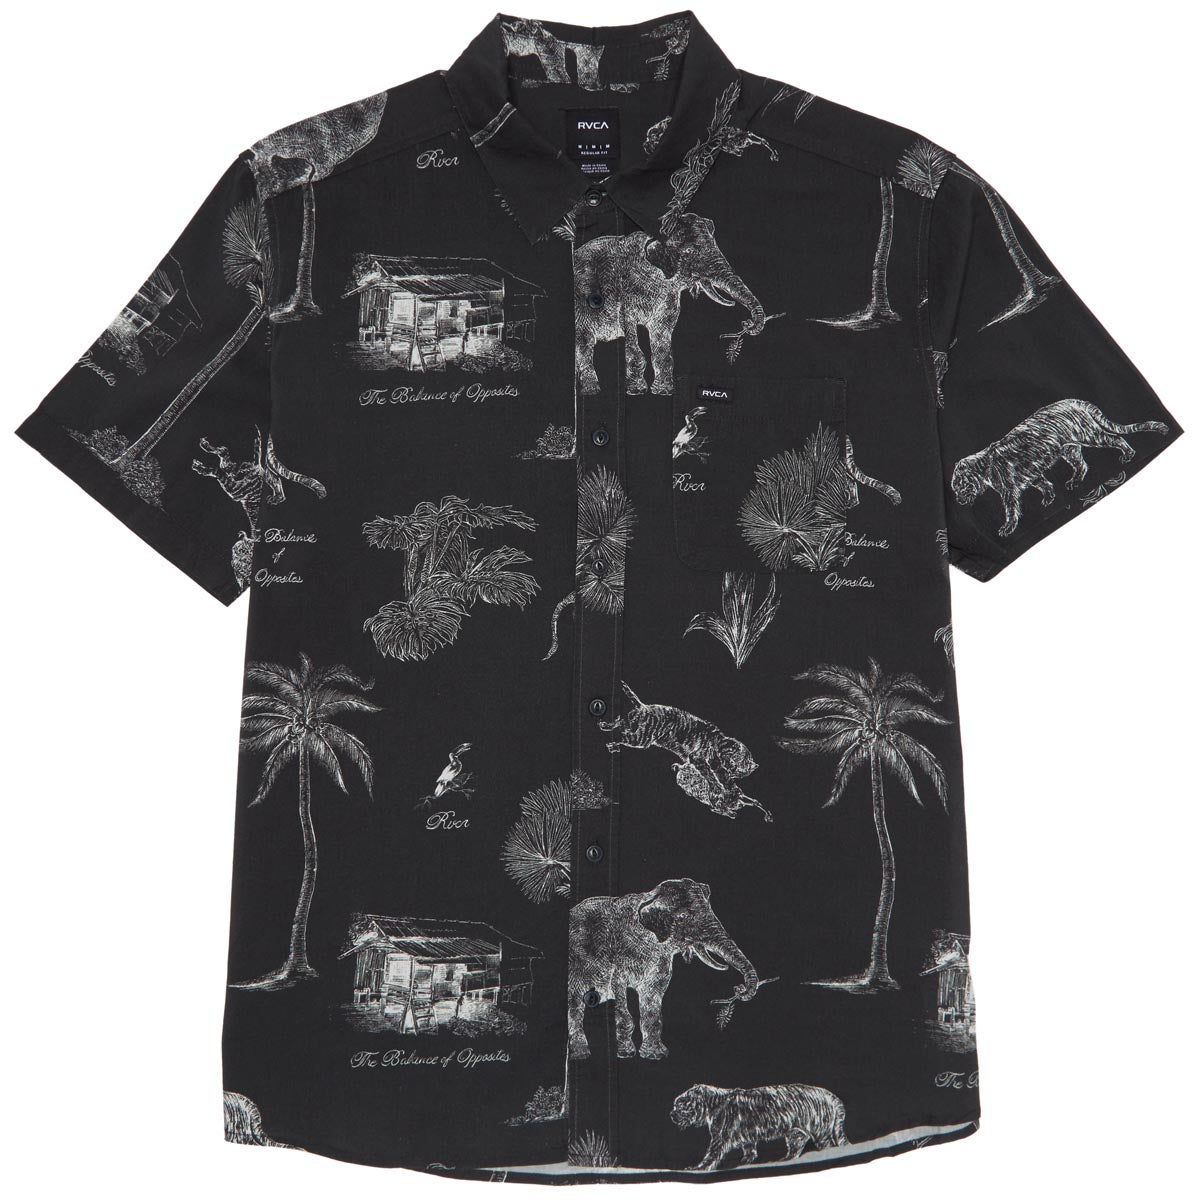 RVCA Tropic Winds Shirt - New Black image 1